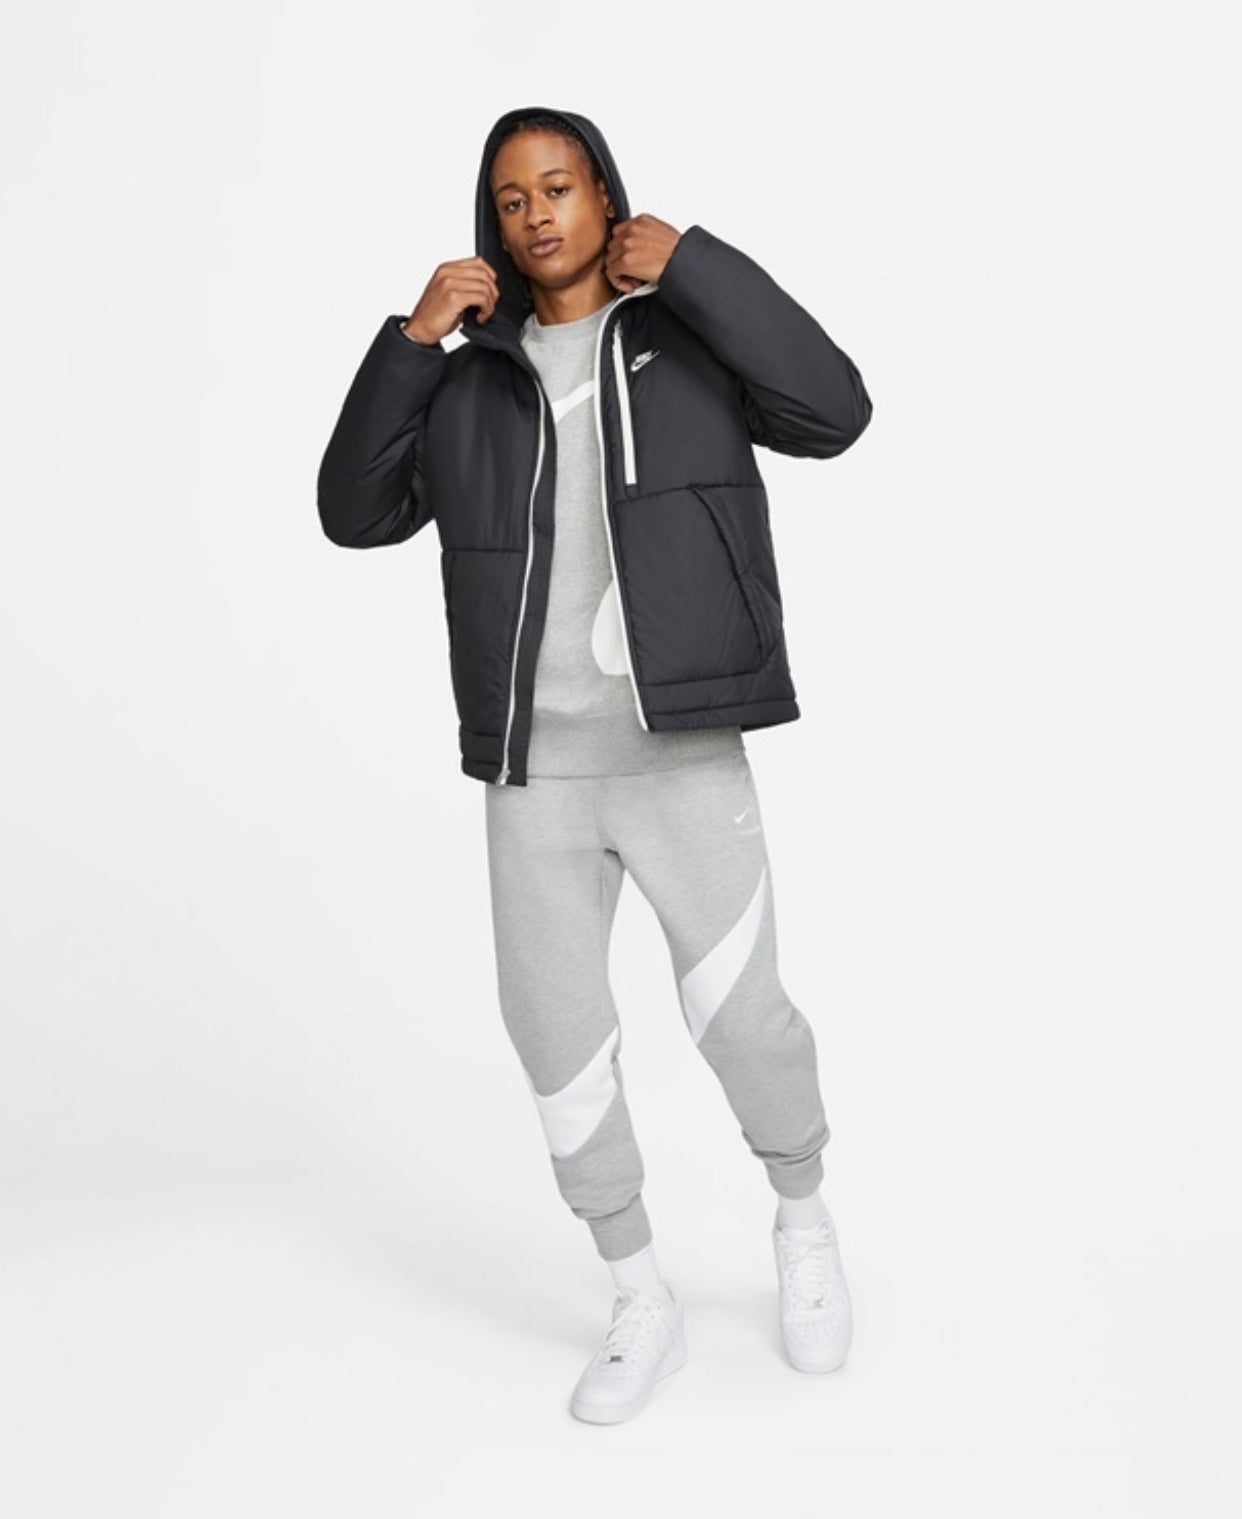 Nike Therma-Fit kabát